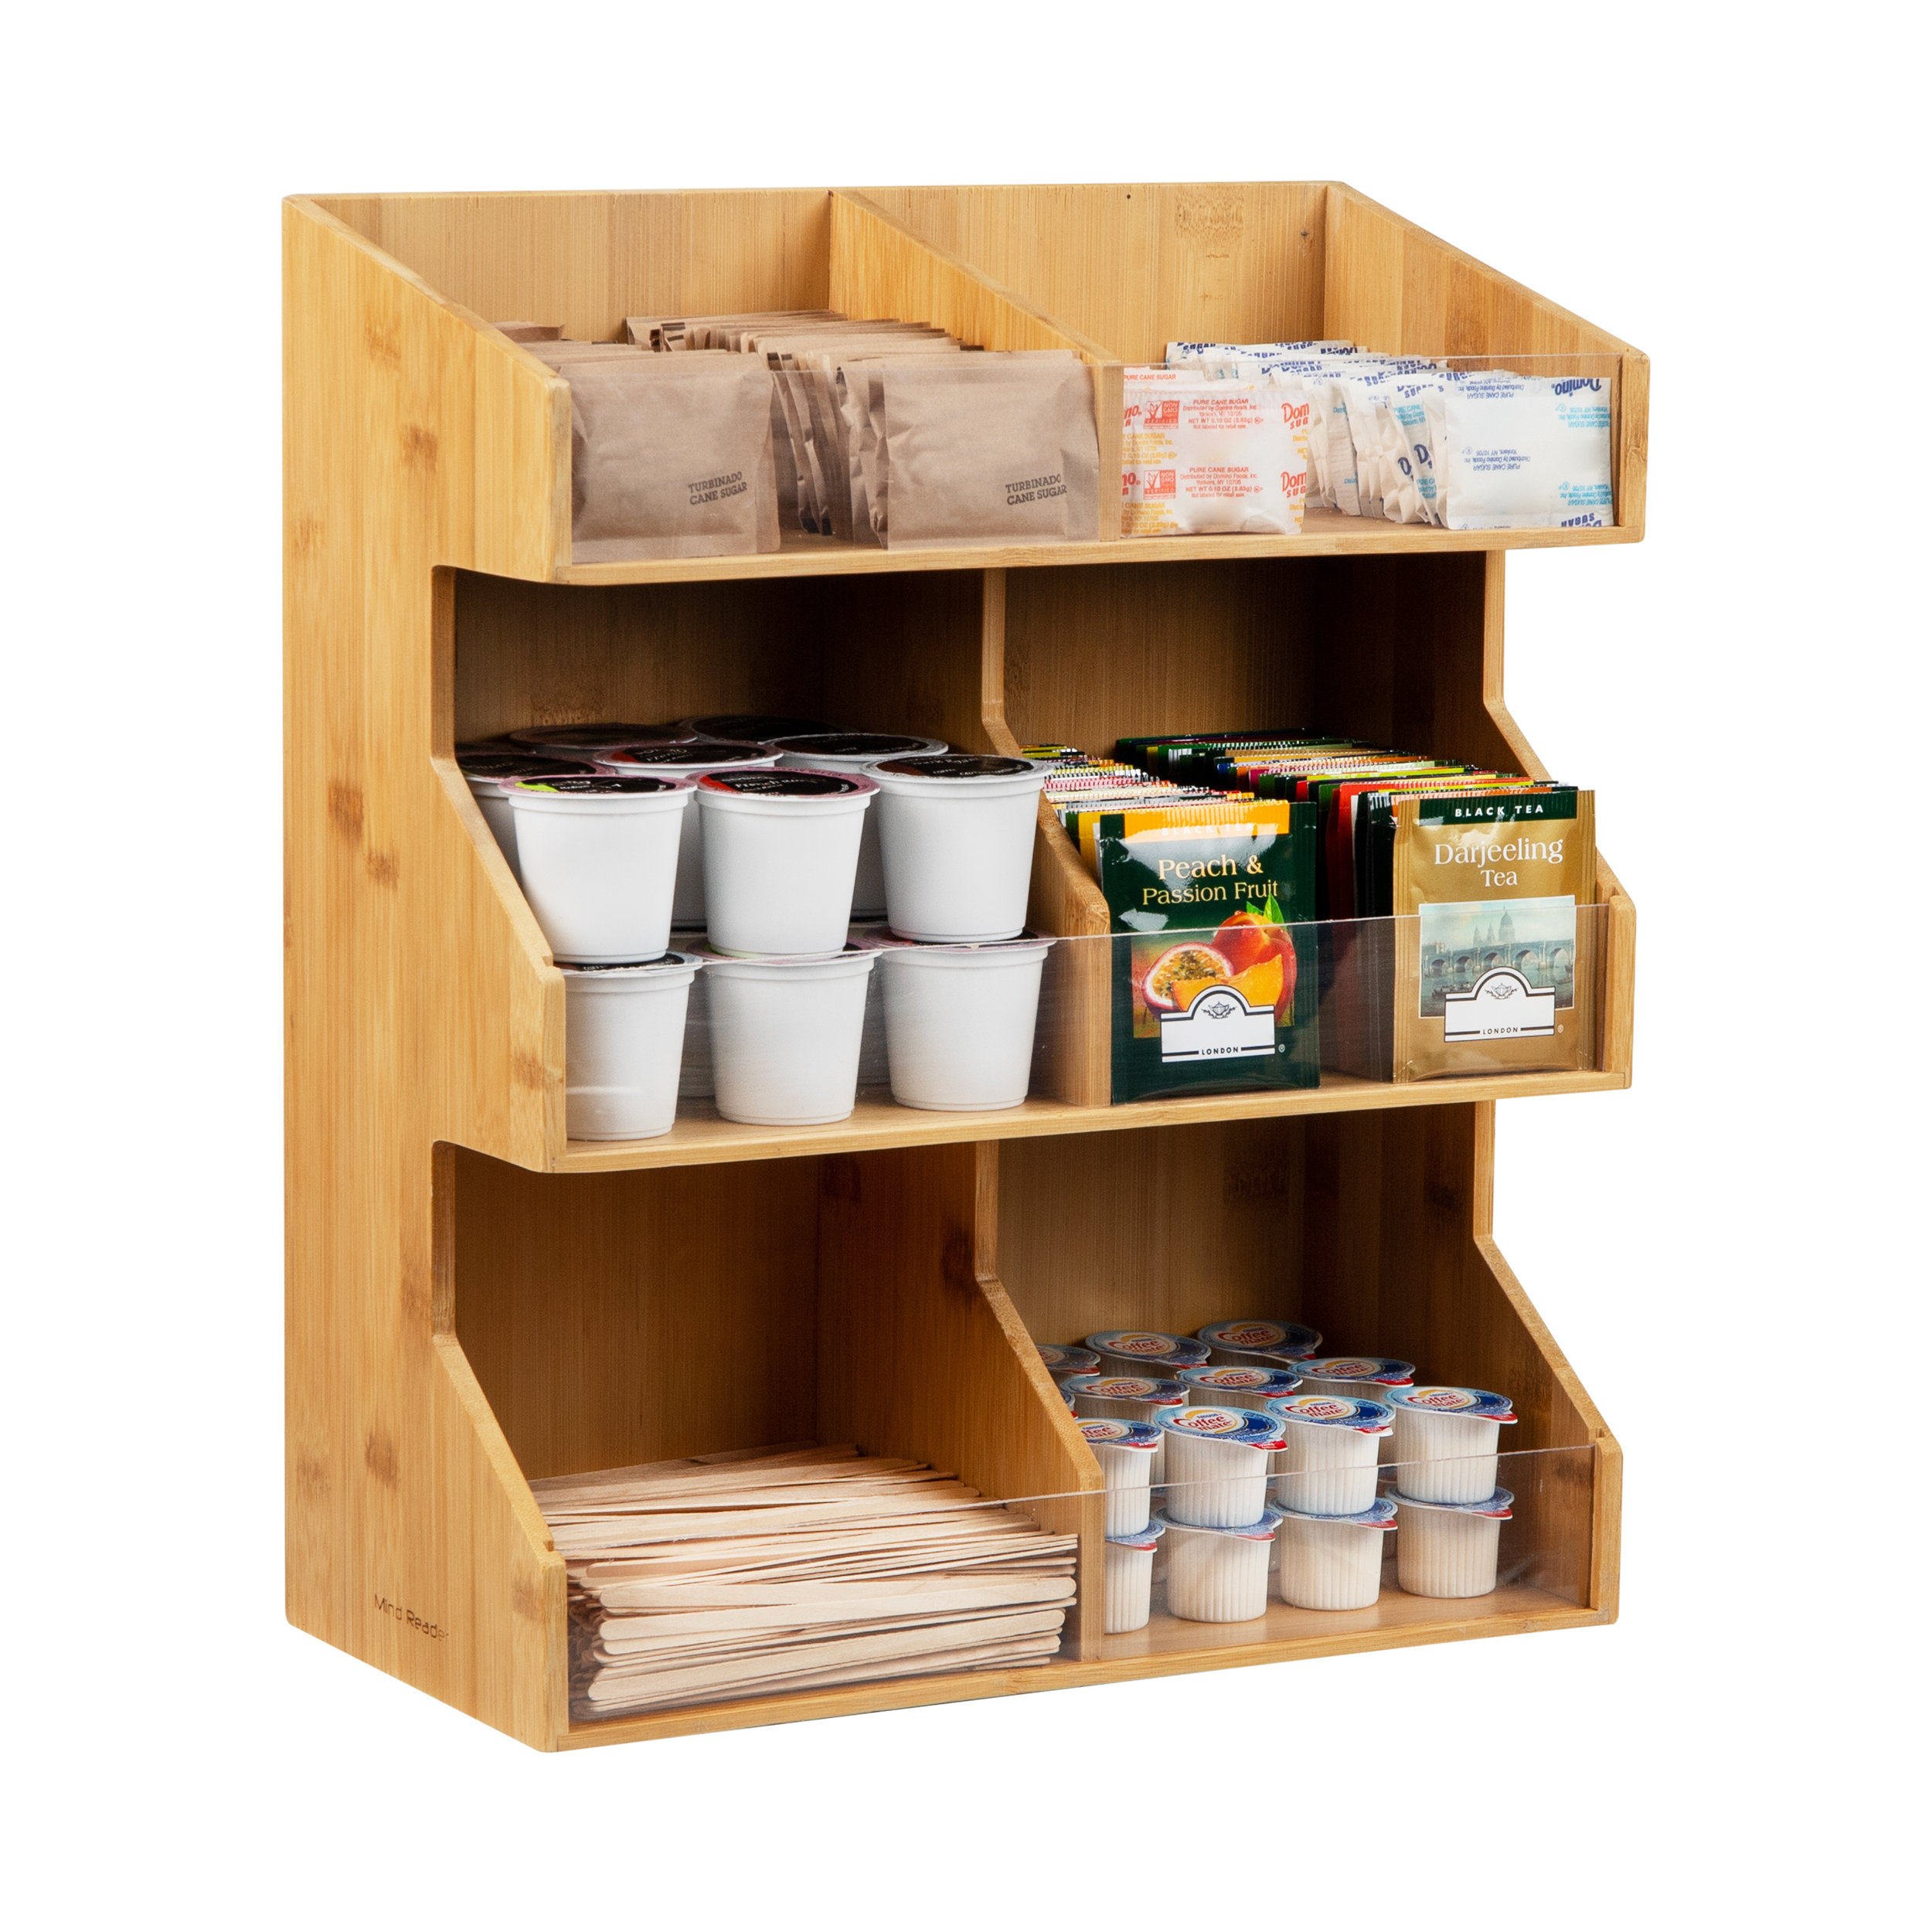 Coffee Station Organizer Wooden Coffee Bar Storage Organizer K Cup